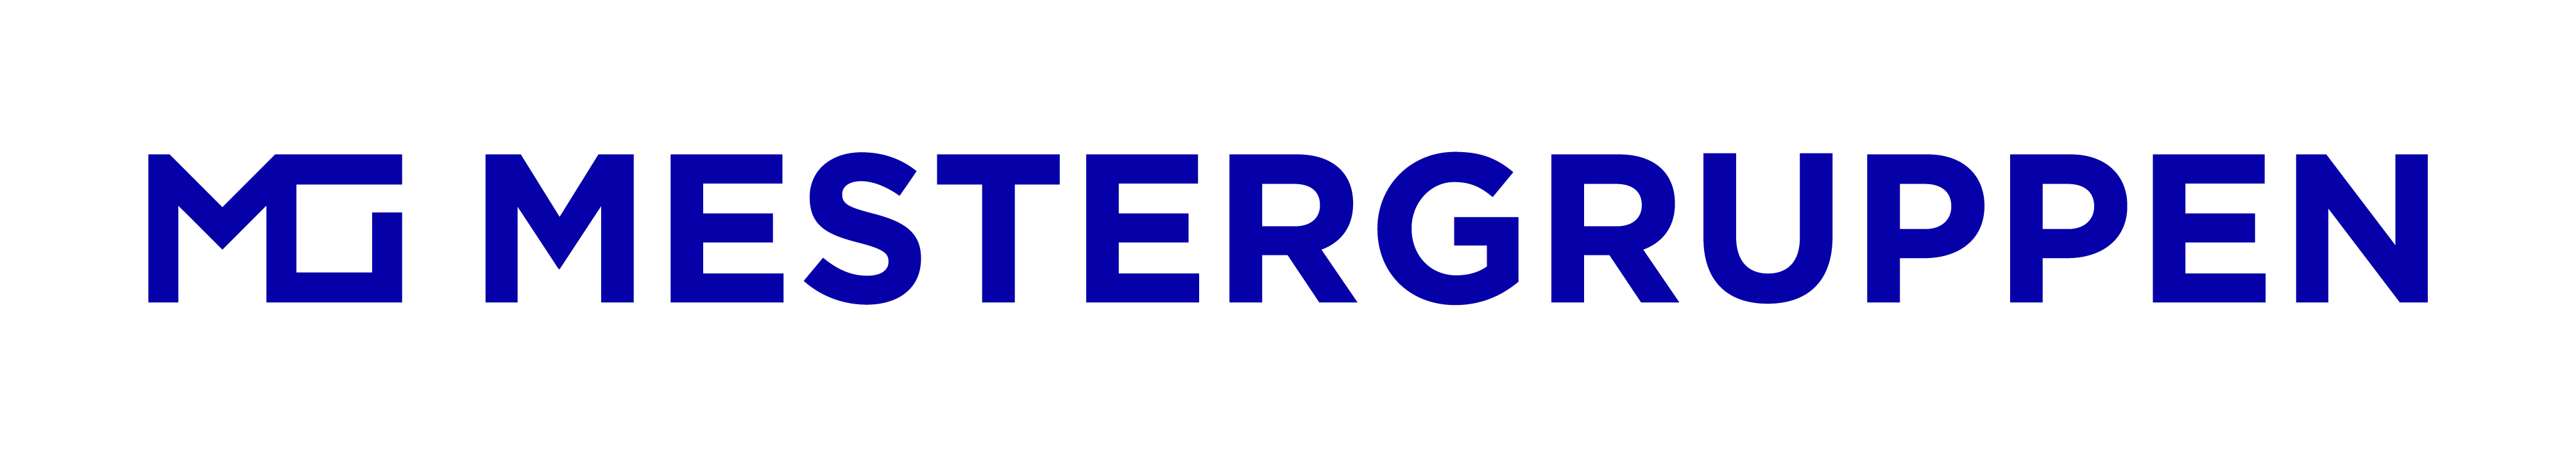 mestergruppen_main_logo